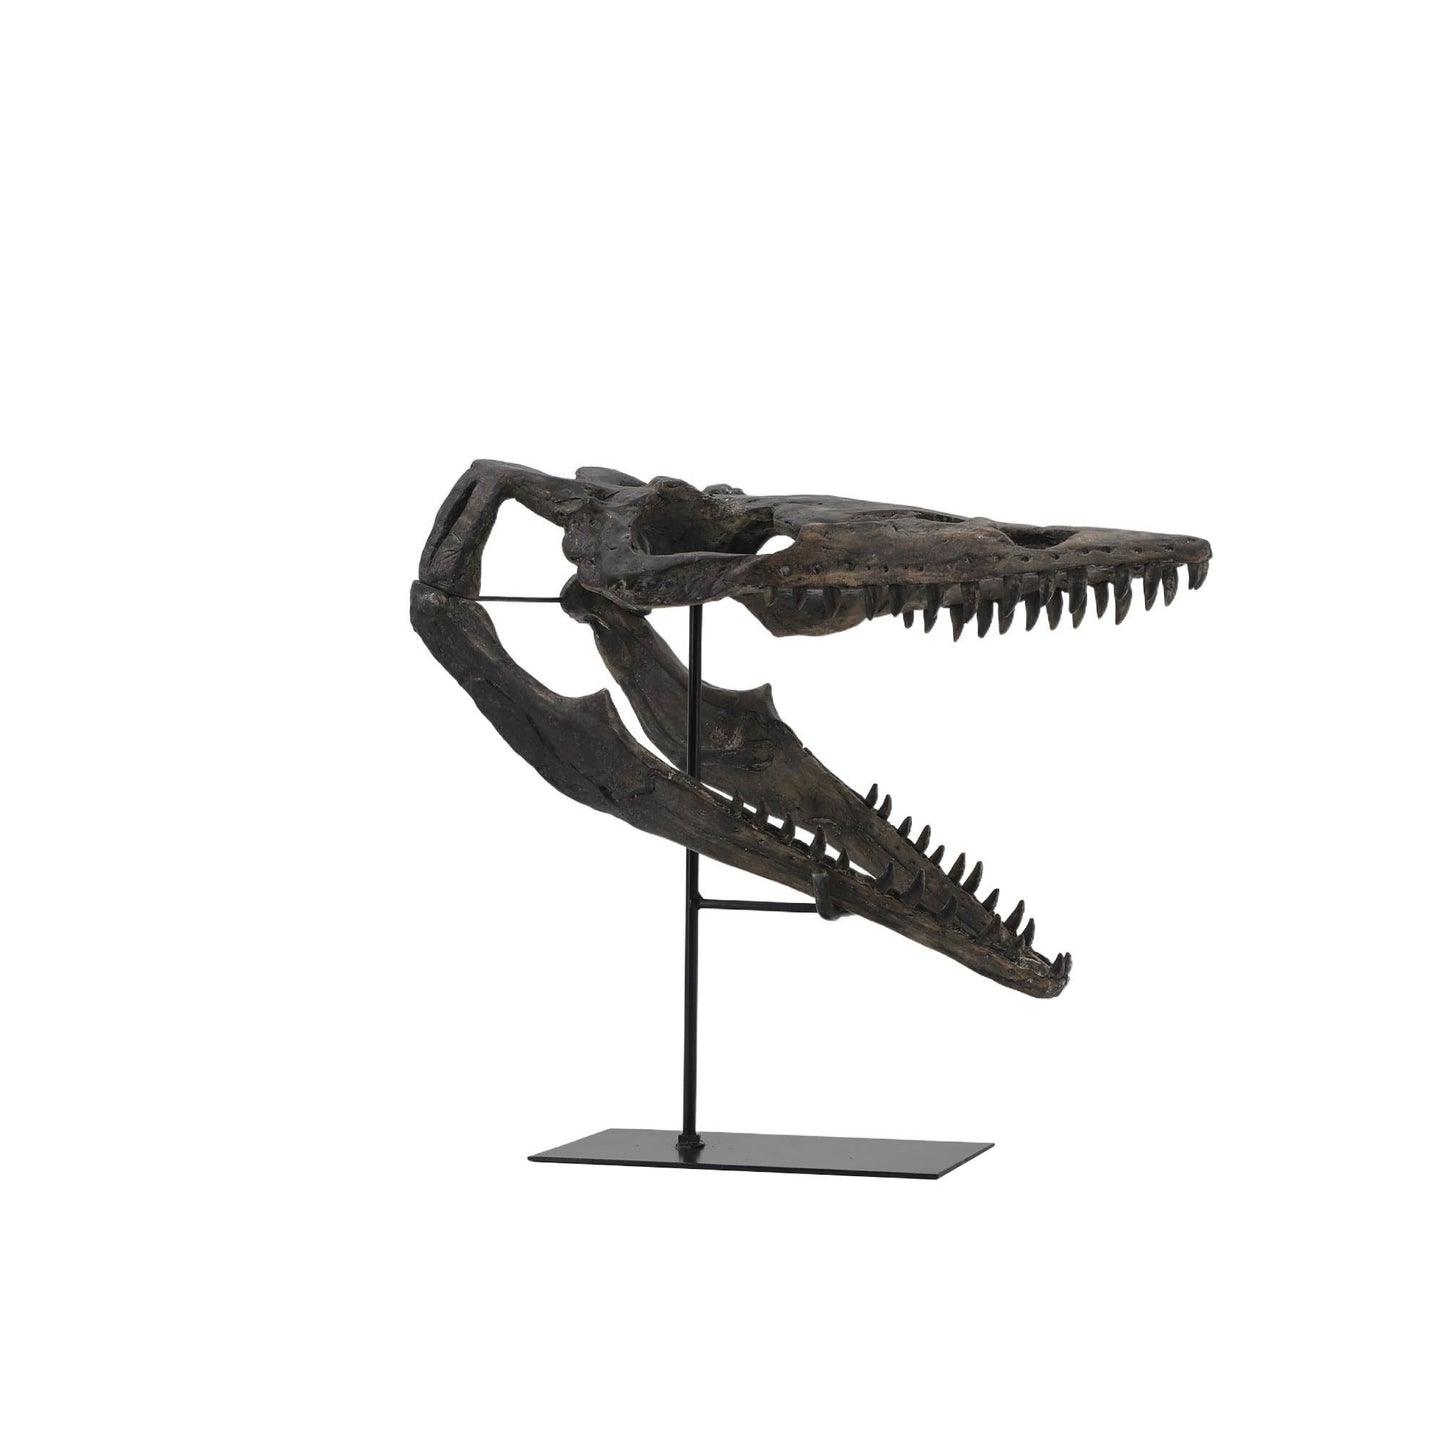 Replica Plioplatecarpus Dinosaur Large Skull - Stemcell Science Shop